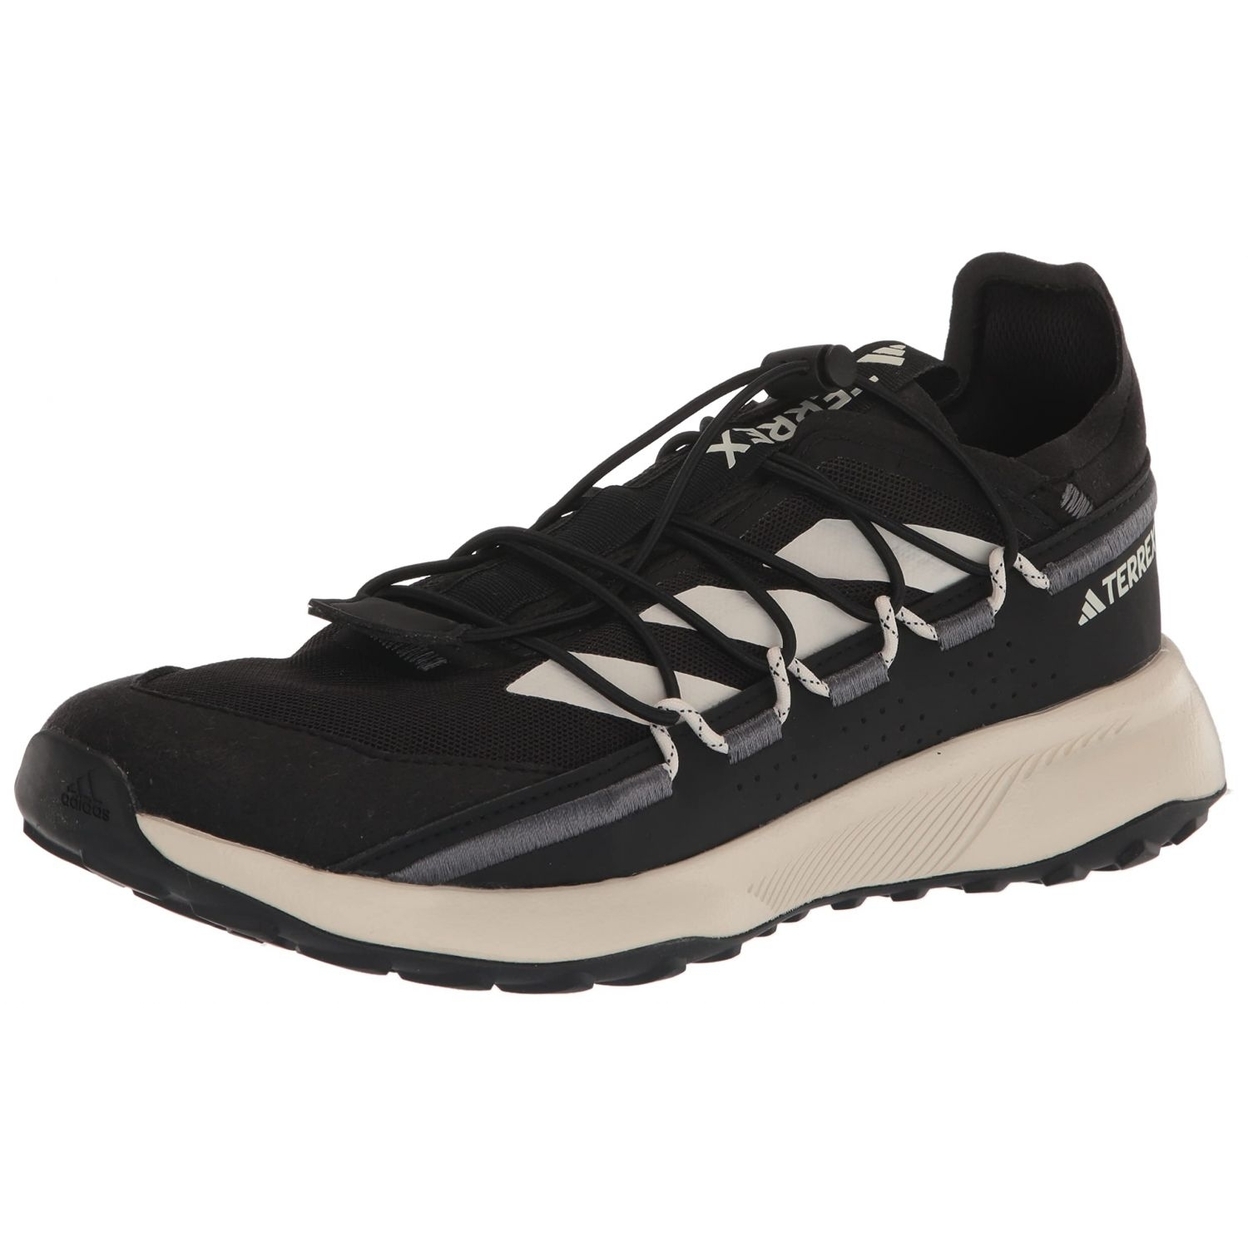 Adidas Women's Terrex Voyager 21 Trail Running Shoe - Hiking Shoe 5 GREY SIX/CORE BLACK/FTWR WHITE - GREY SIX/CORE BLACK/FTWR WHITE, 8